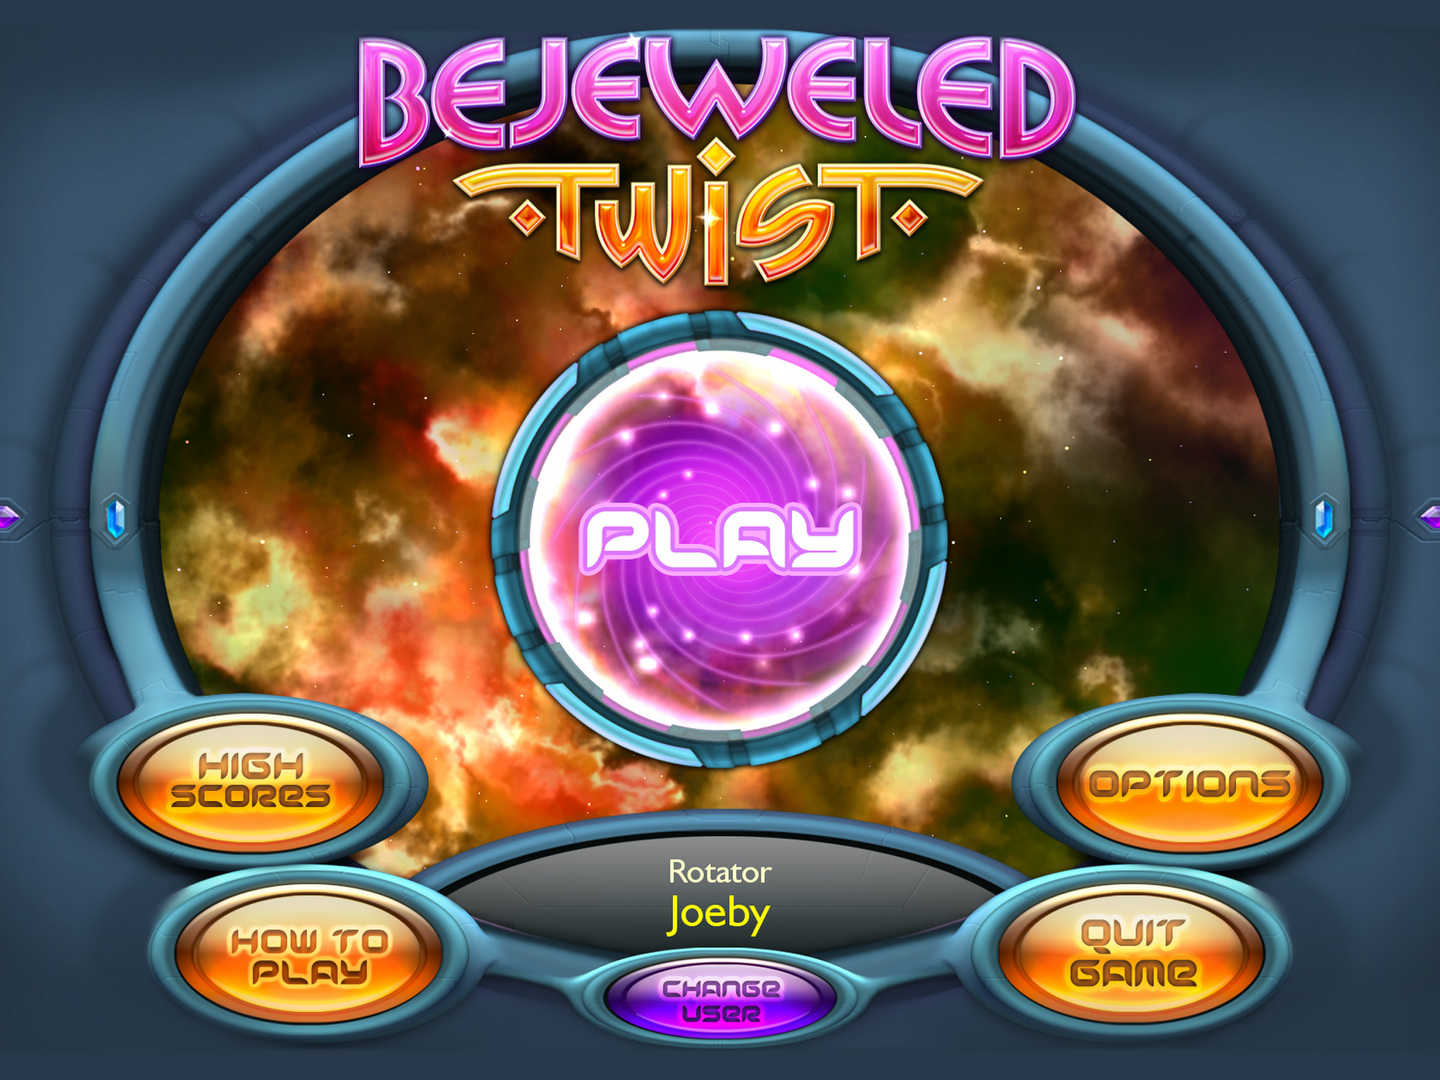 Bejeweled' has a brand-new twist